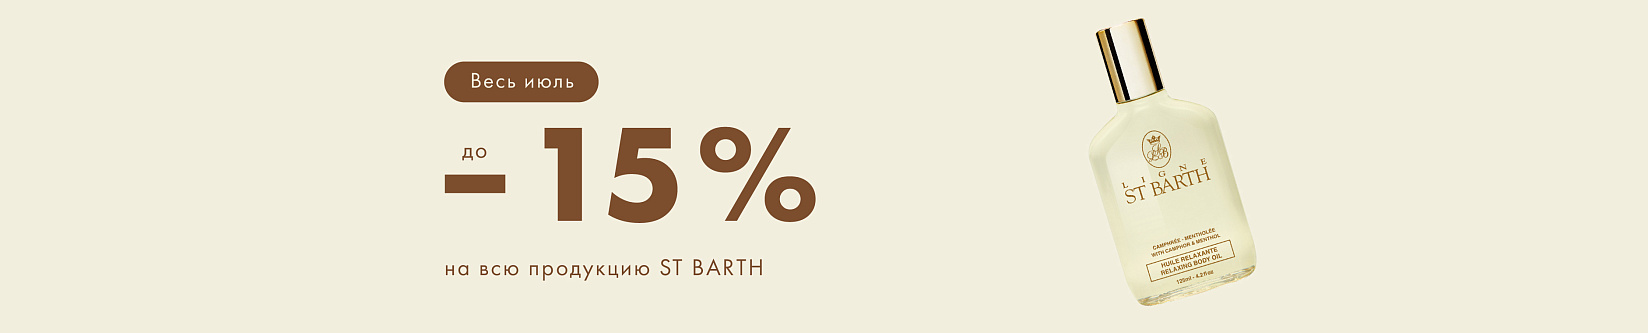 -15% на продукцию бренда LIGNE ST.BARTH!